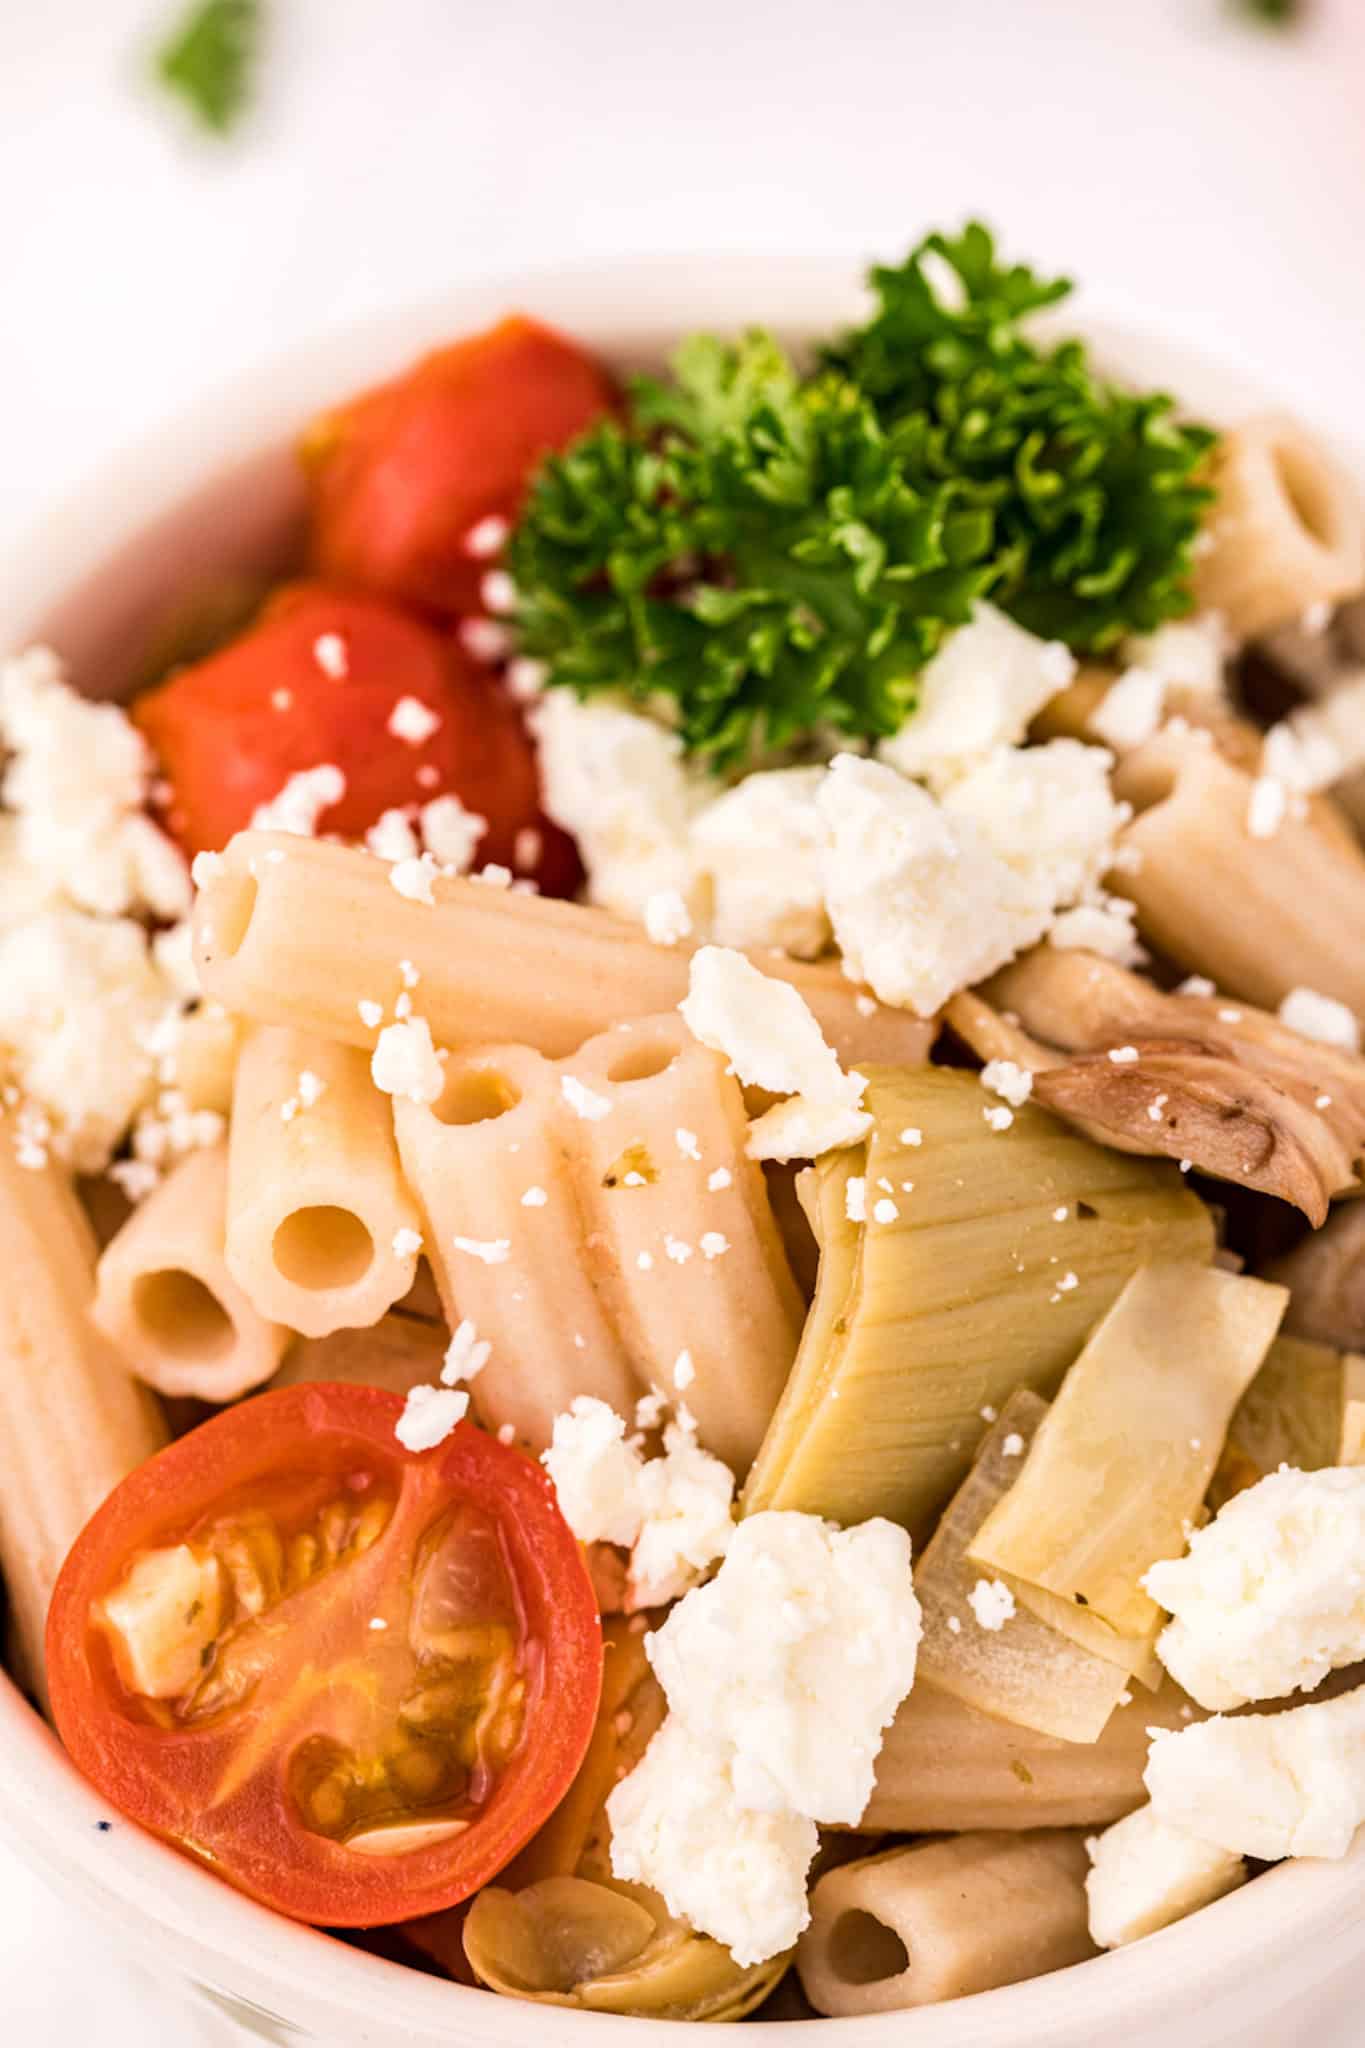 gluten-free pasta salad with veggies and cheese.